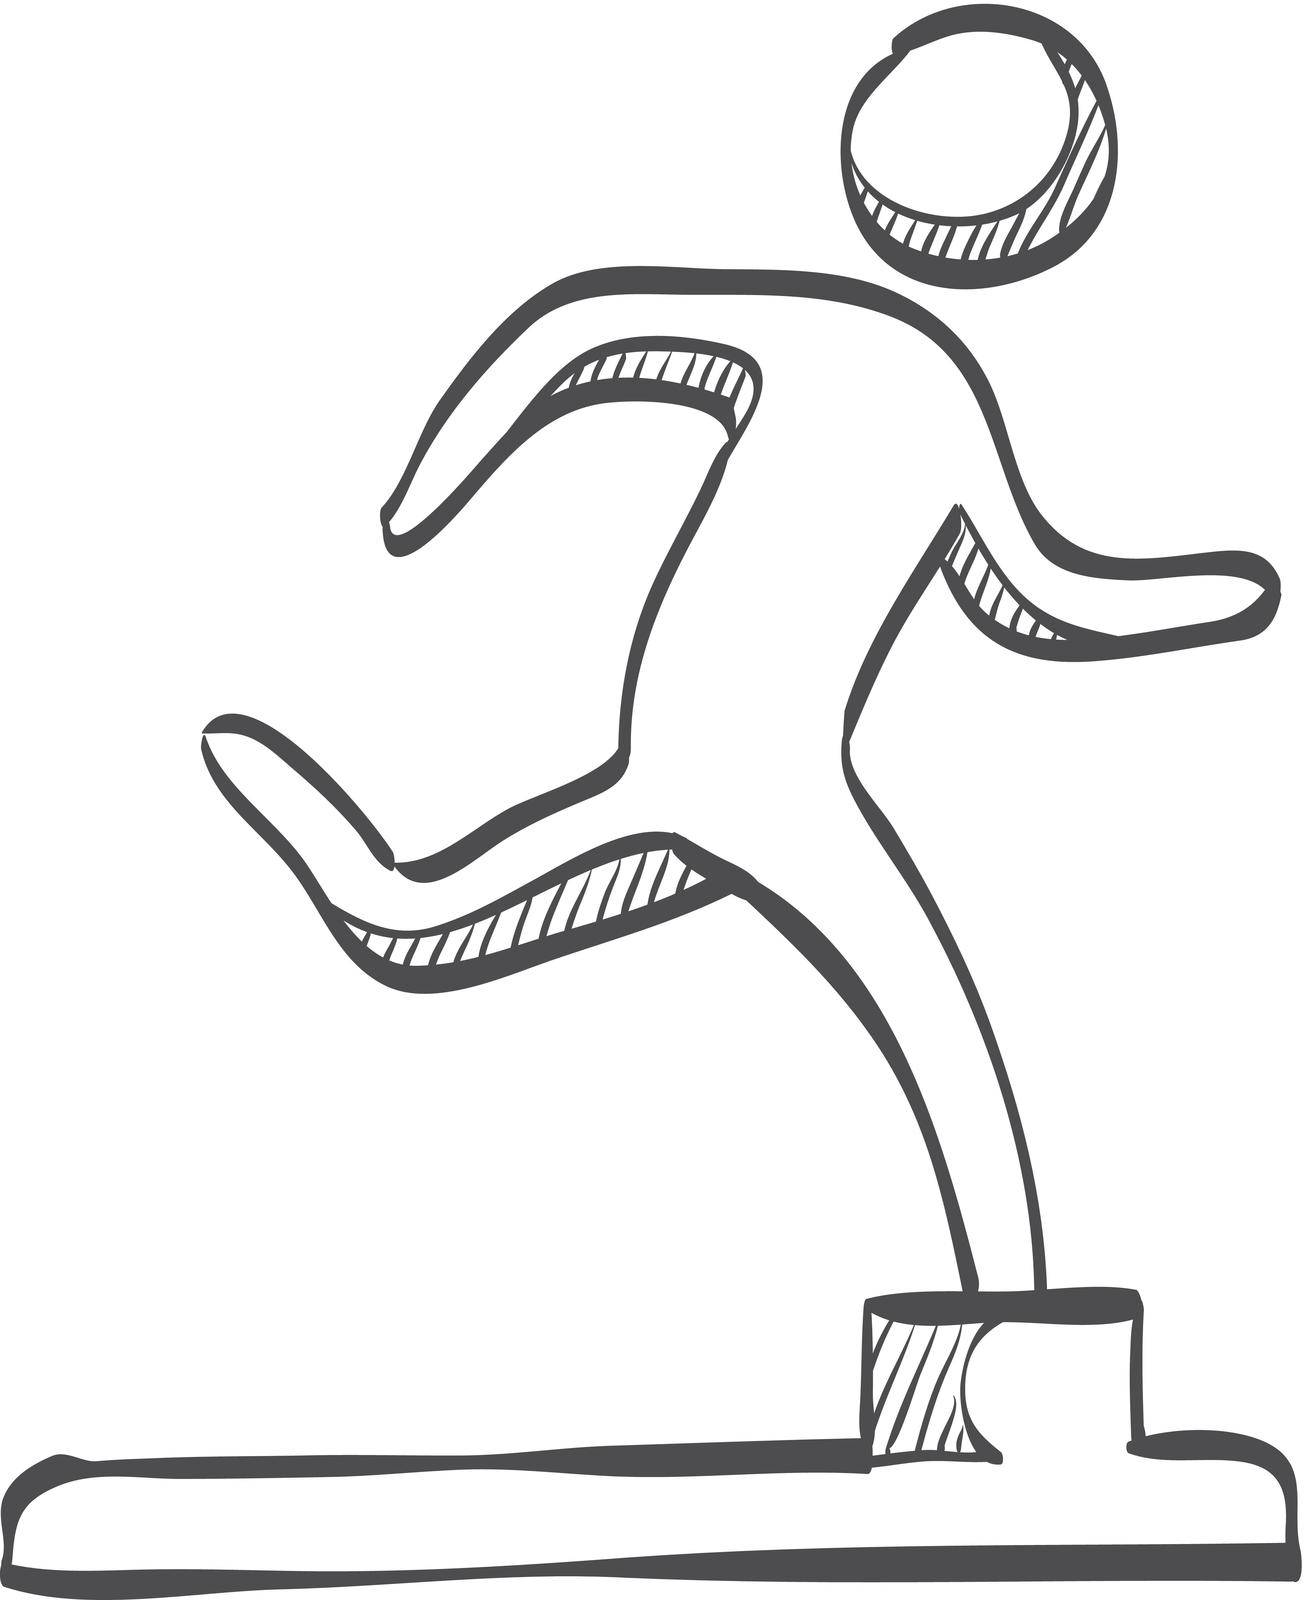 Sketch icon - Athletic trophy by puruan